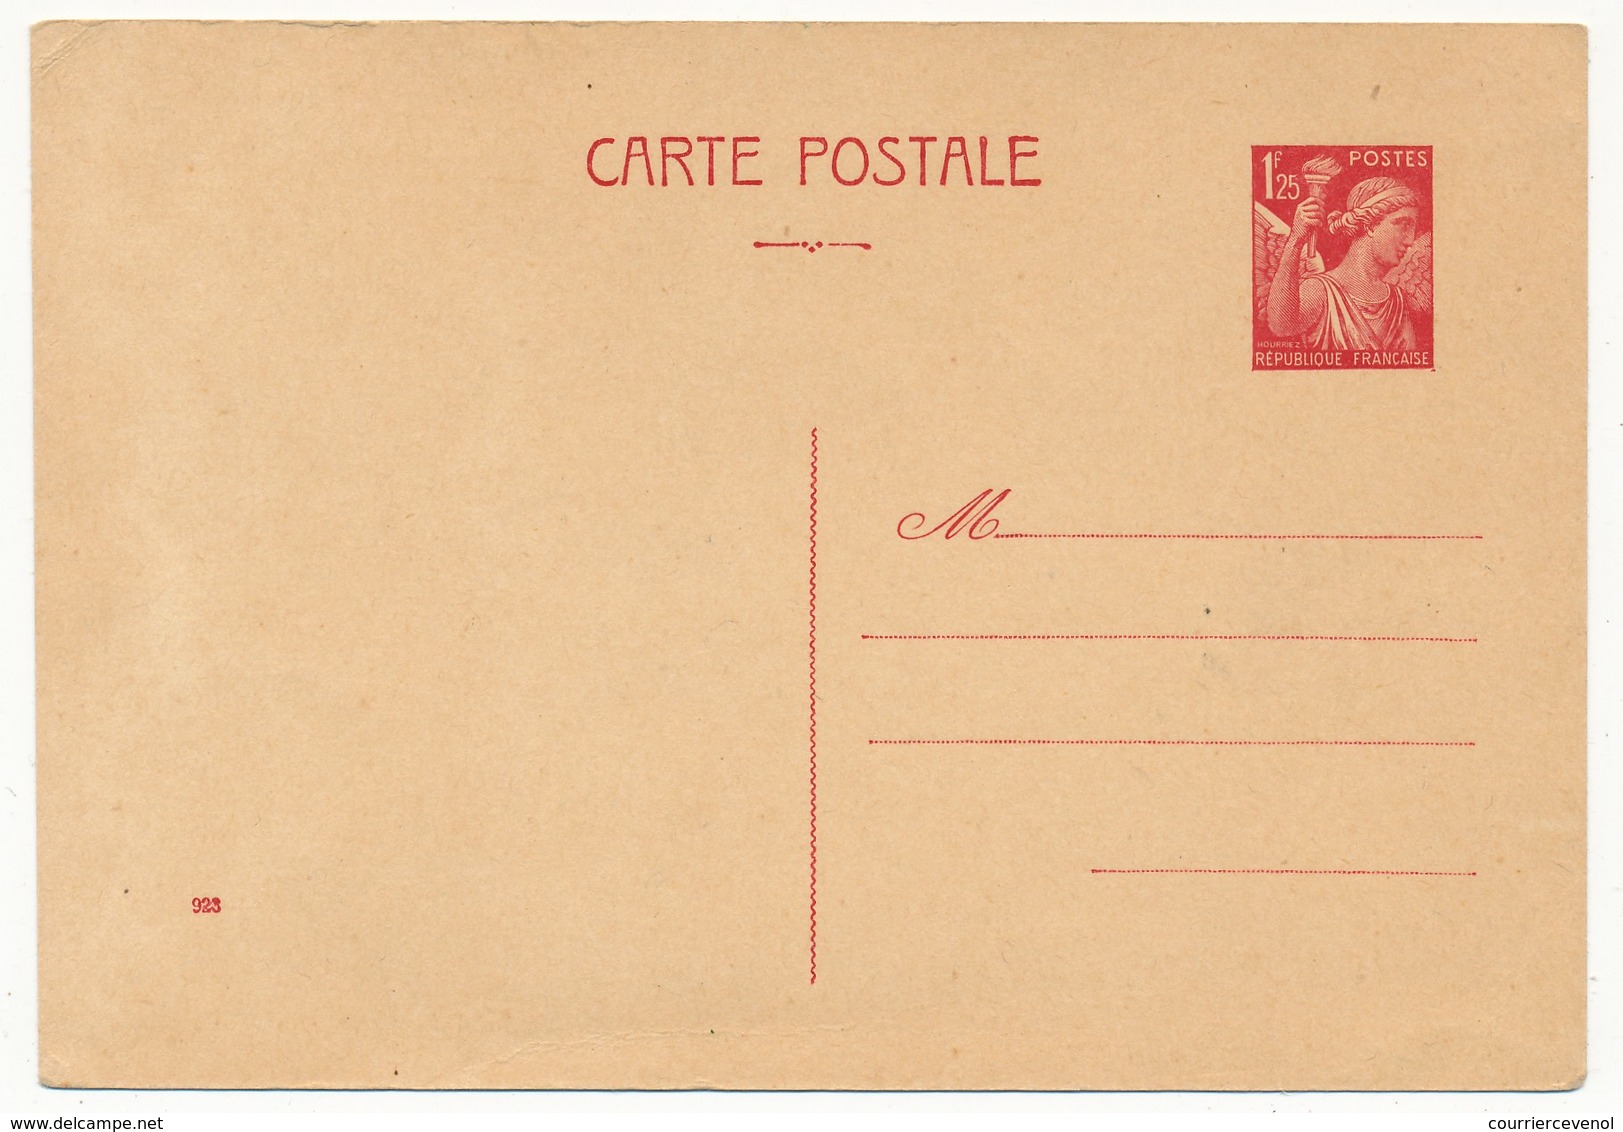 FRANCE - CP Type Iris - 1,25F - Carte Postale Datée 923, Neuve Et TTB - Standard Postcards & Stamped On Demand (before 1995)